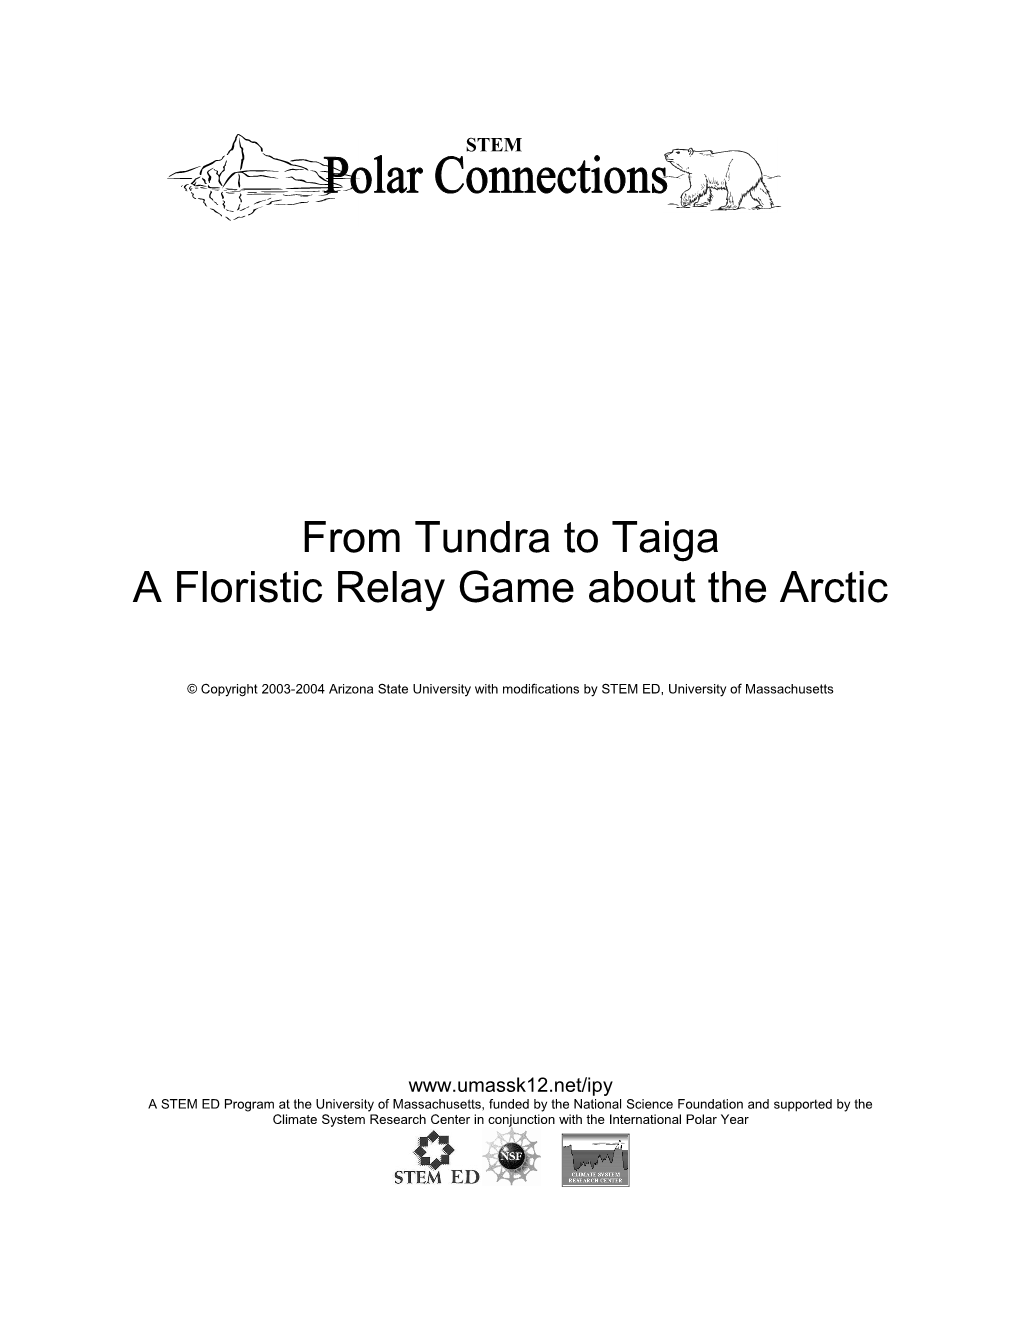 Tundra to Taiga Relay Game